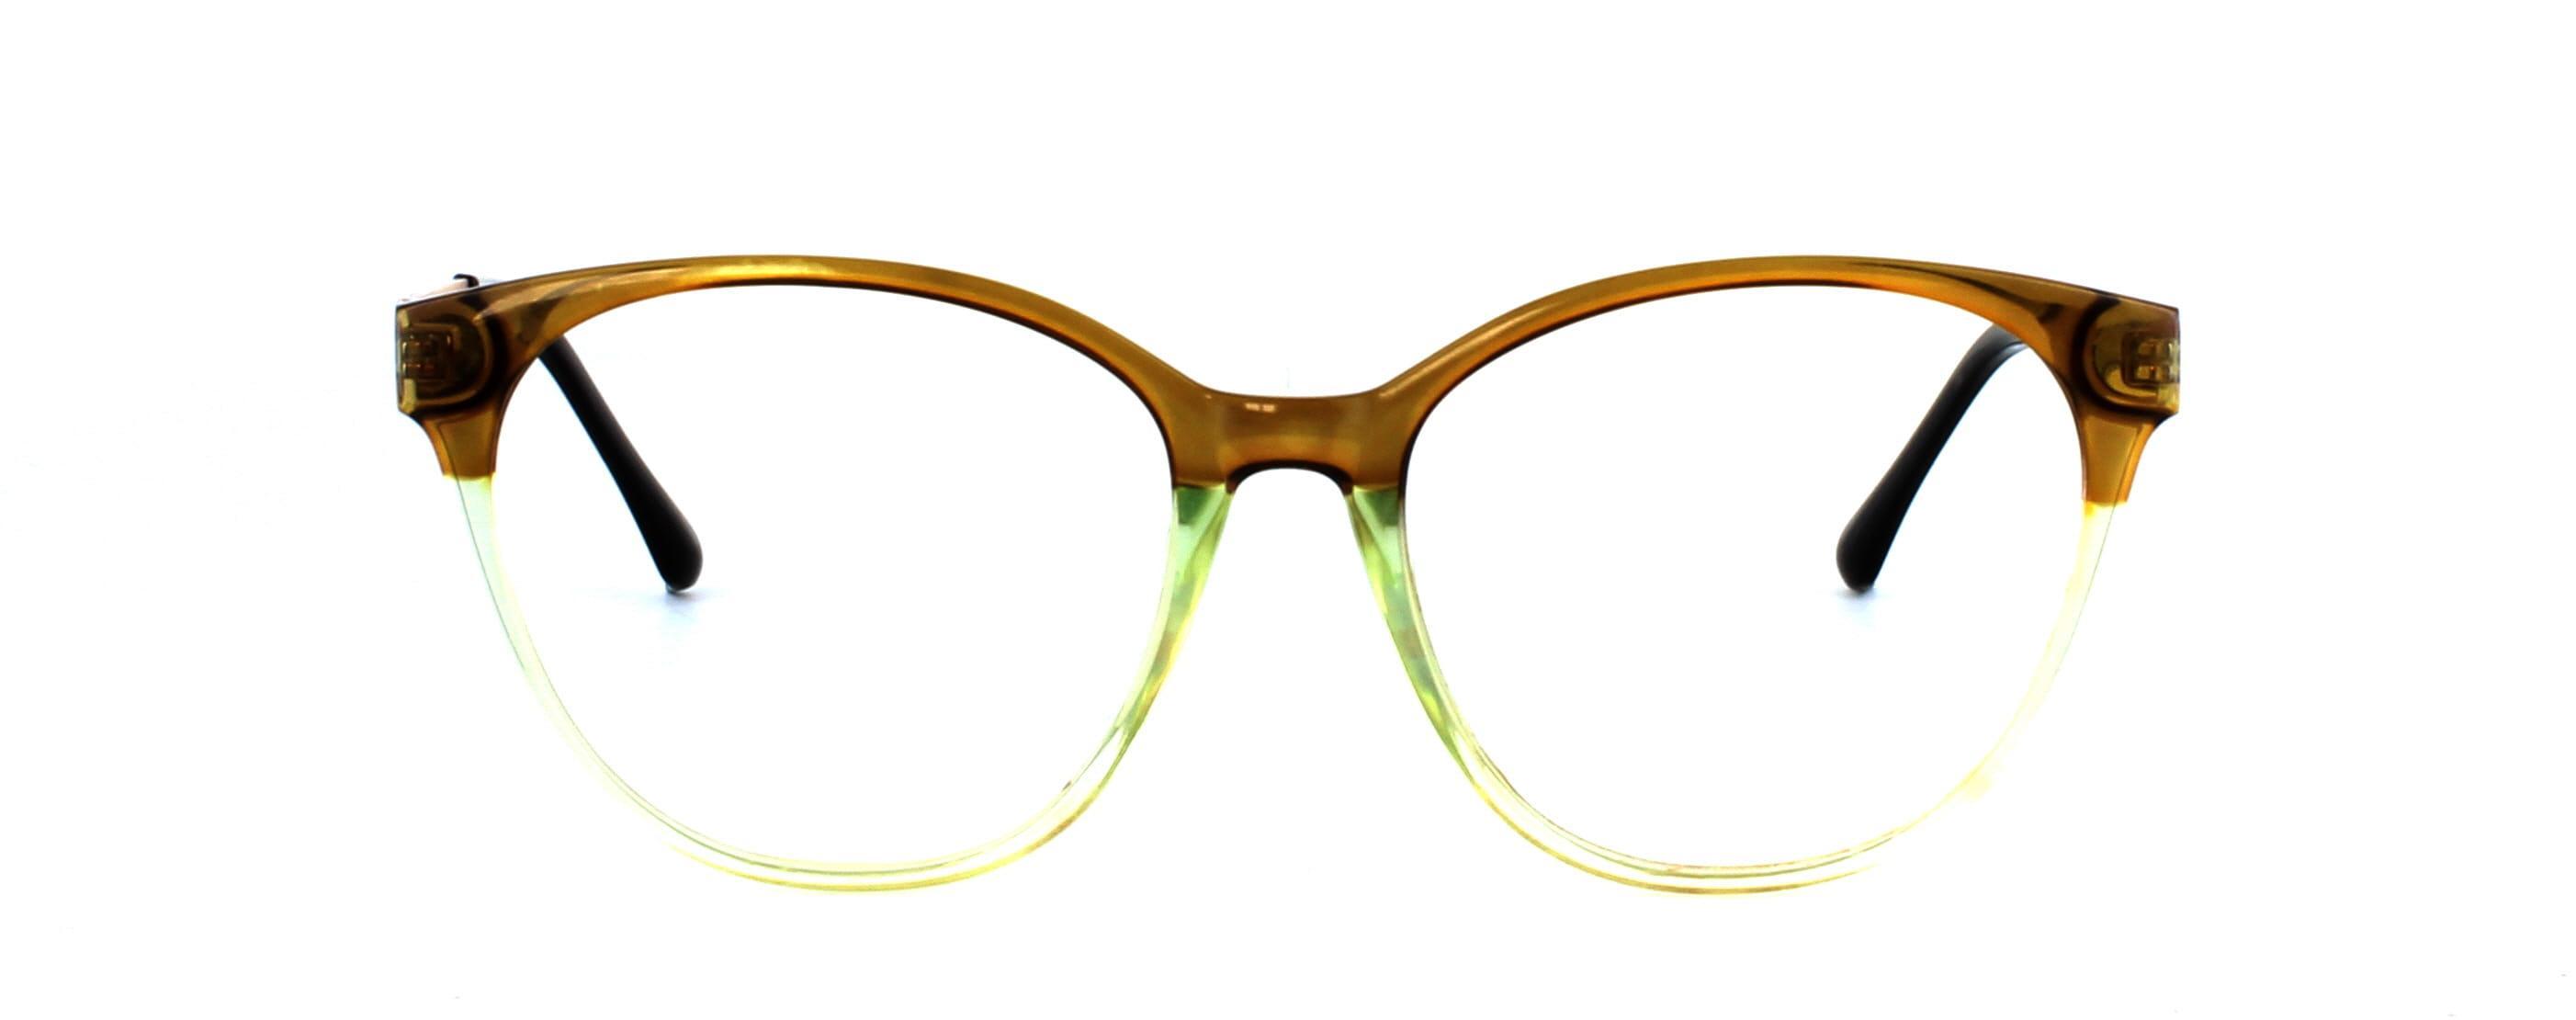 Chamaeleon - Ladies 2-tone plastic glasses - green & brown - image 5